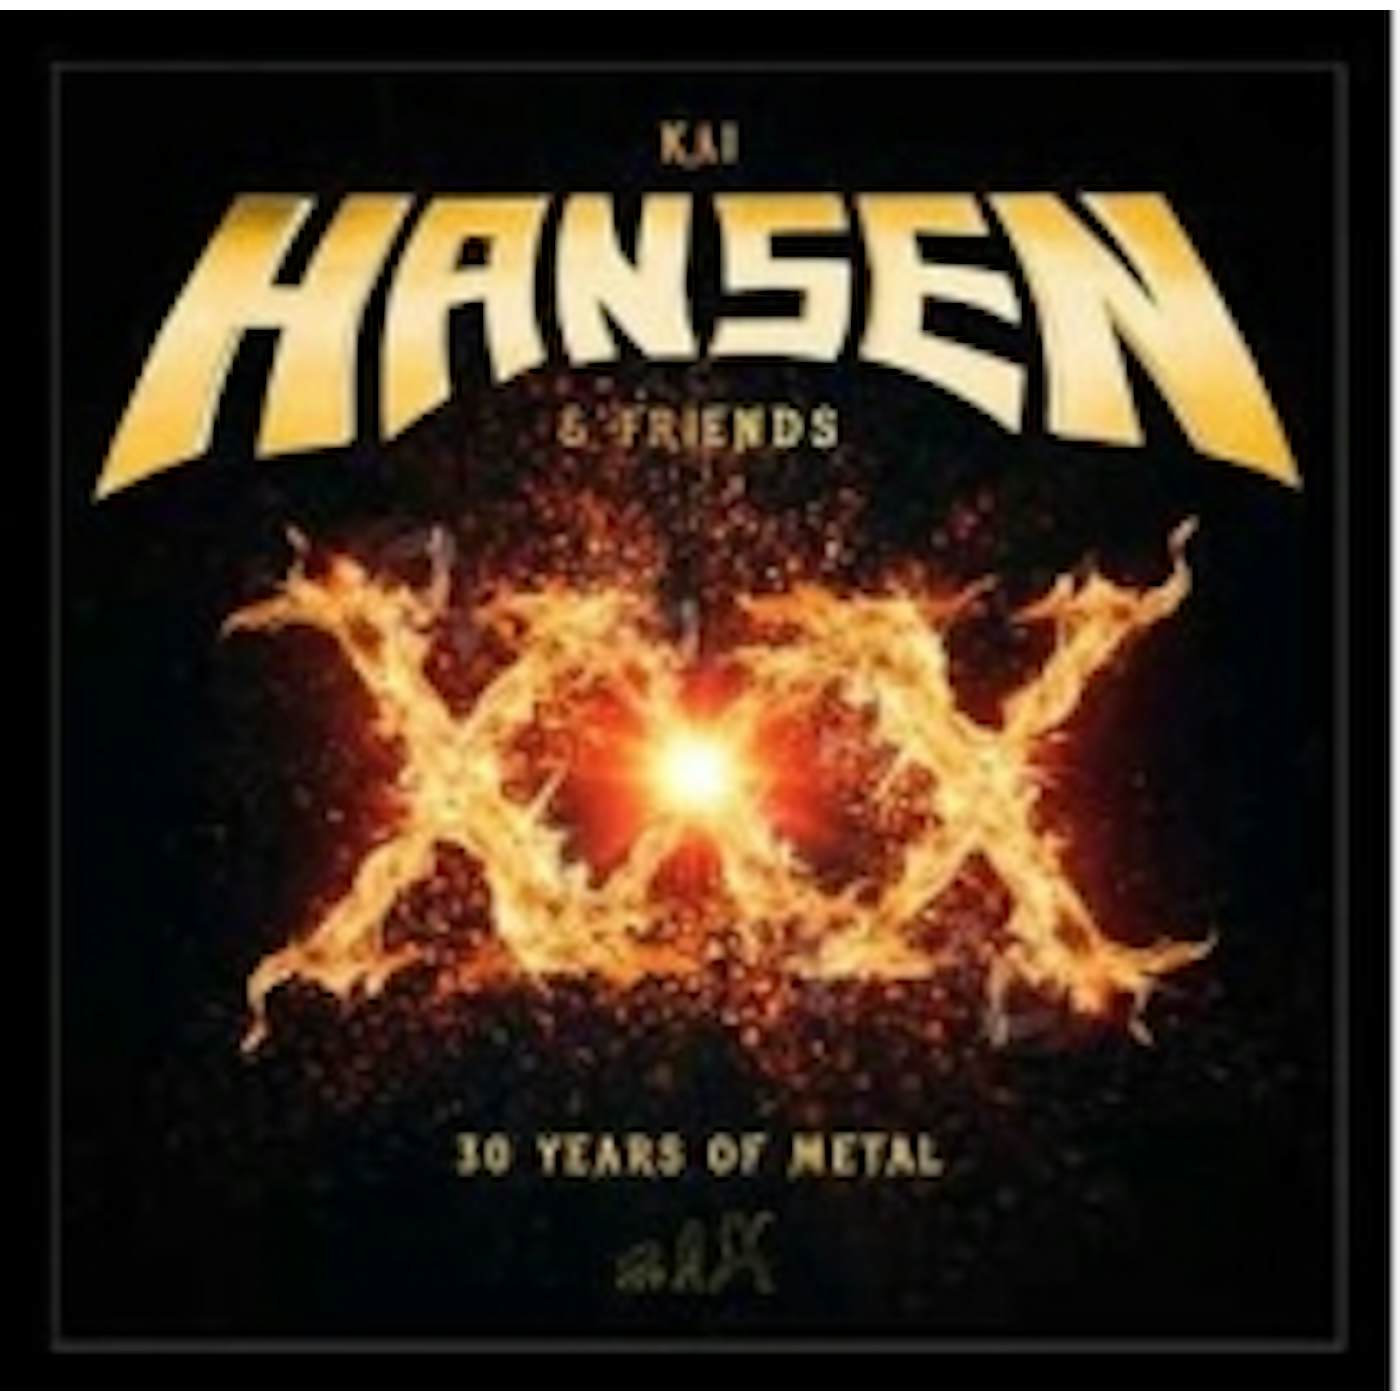 Kai Hansen XXX-Three Decades In Metal Vinyl Record